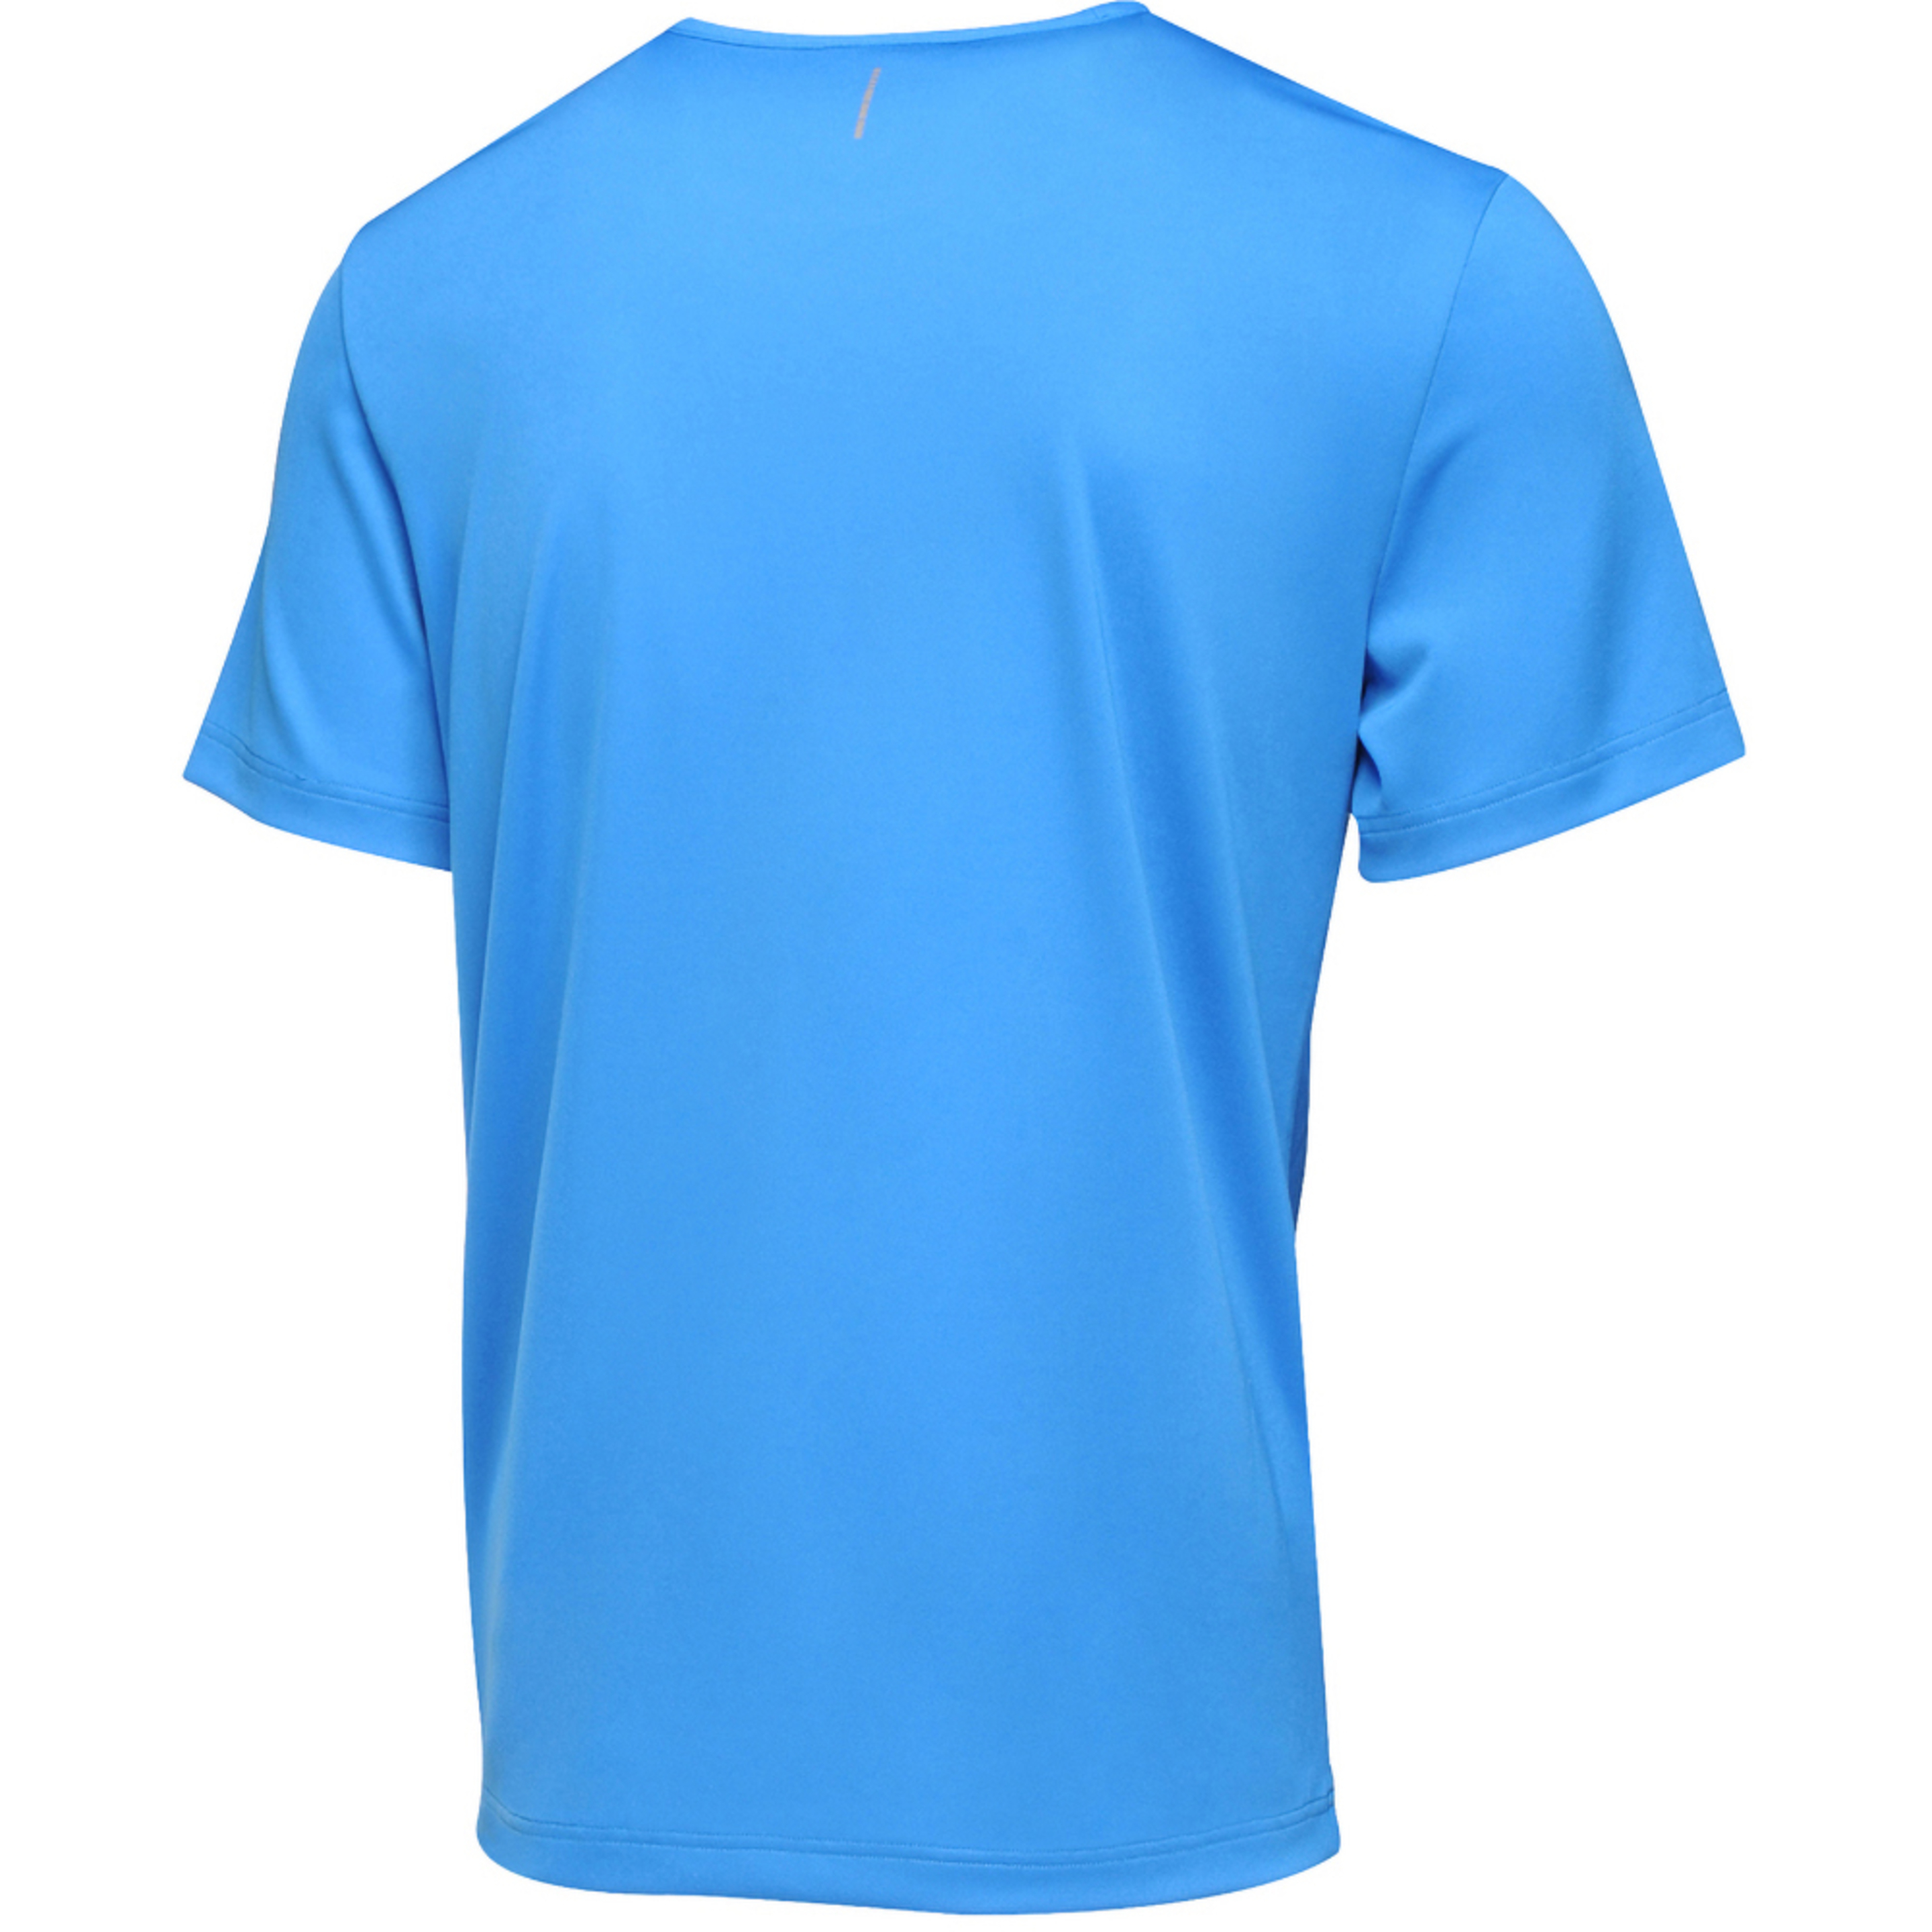 Roupas Ativas Camiseta Masculina De Torino Regatta (Oxford Blue)